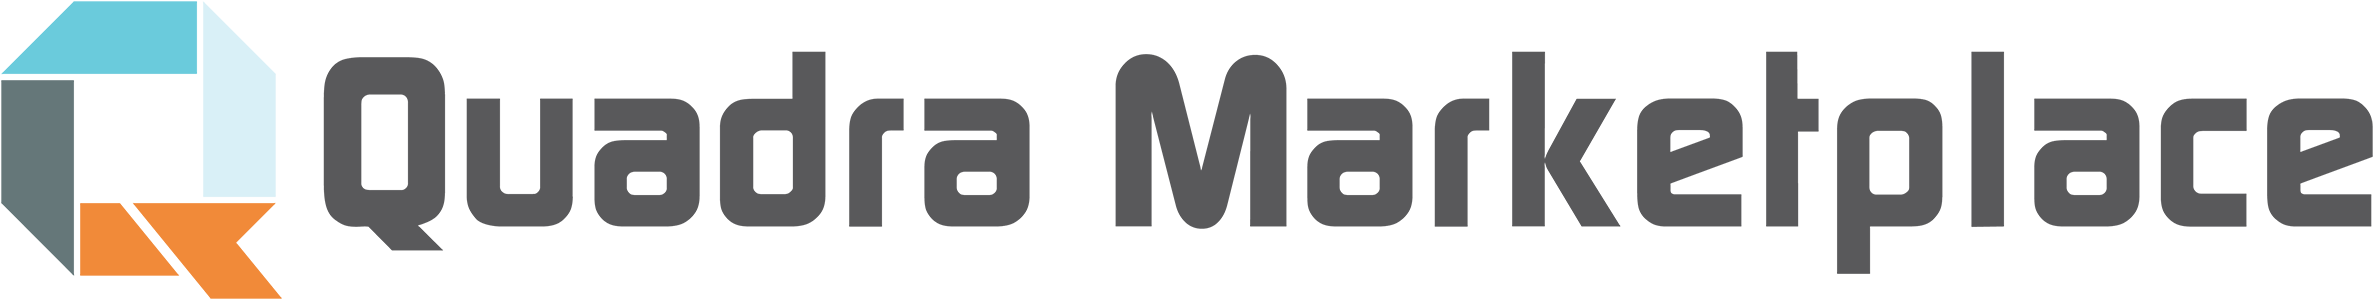 Quadra Marketplace logo